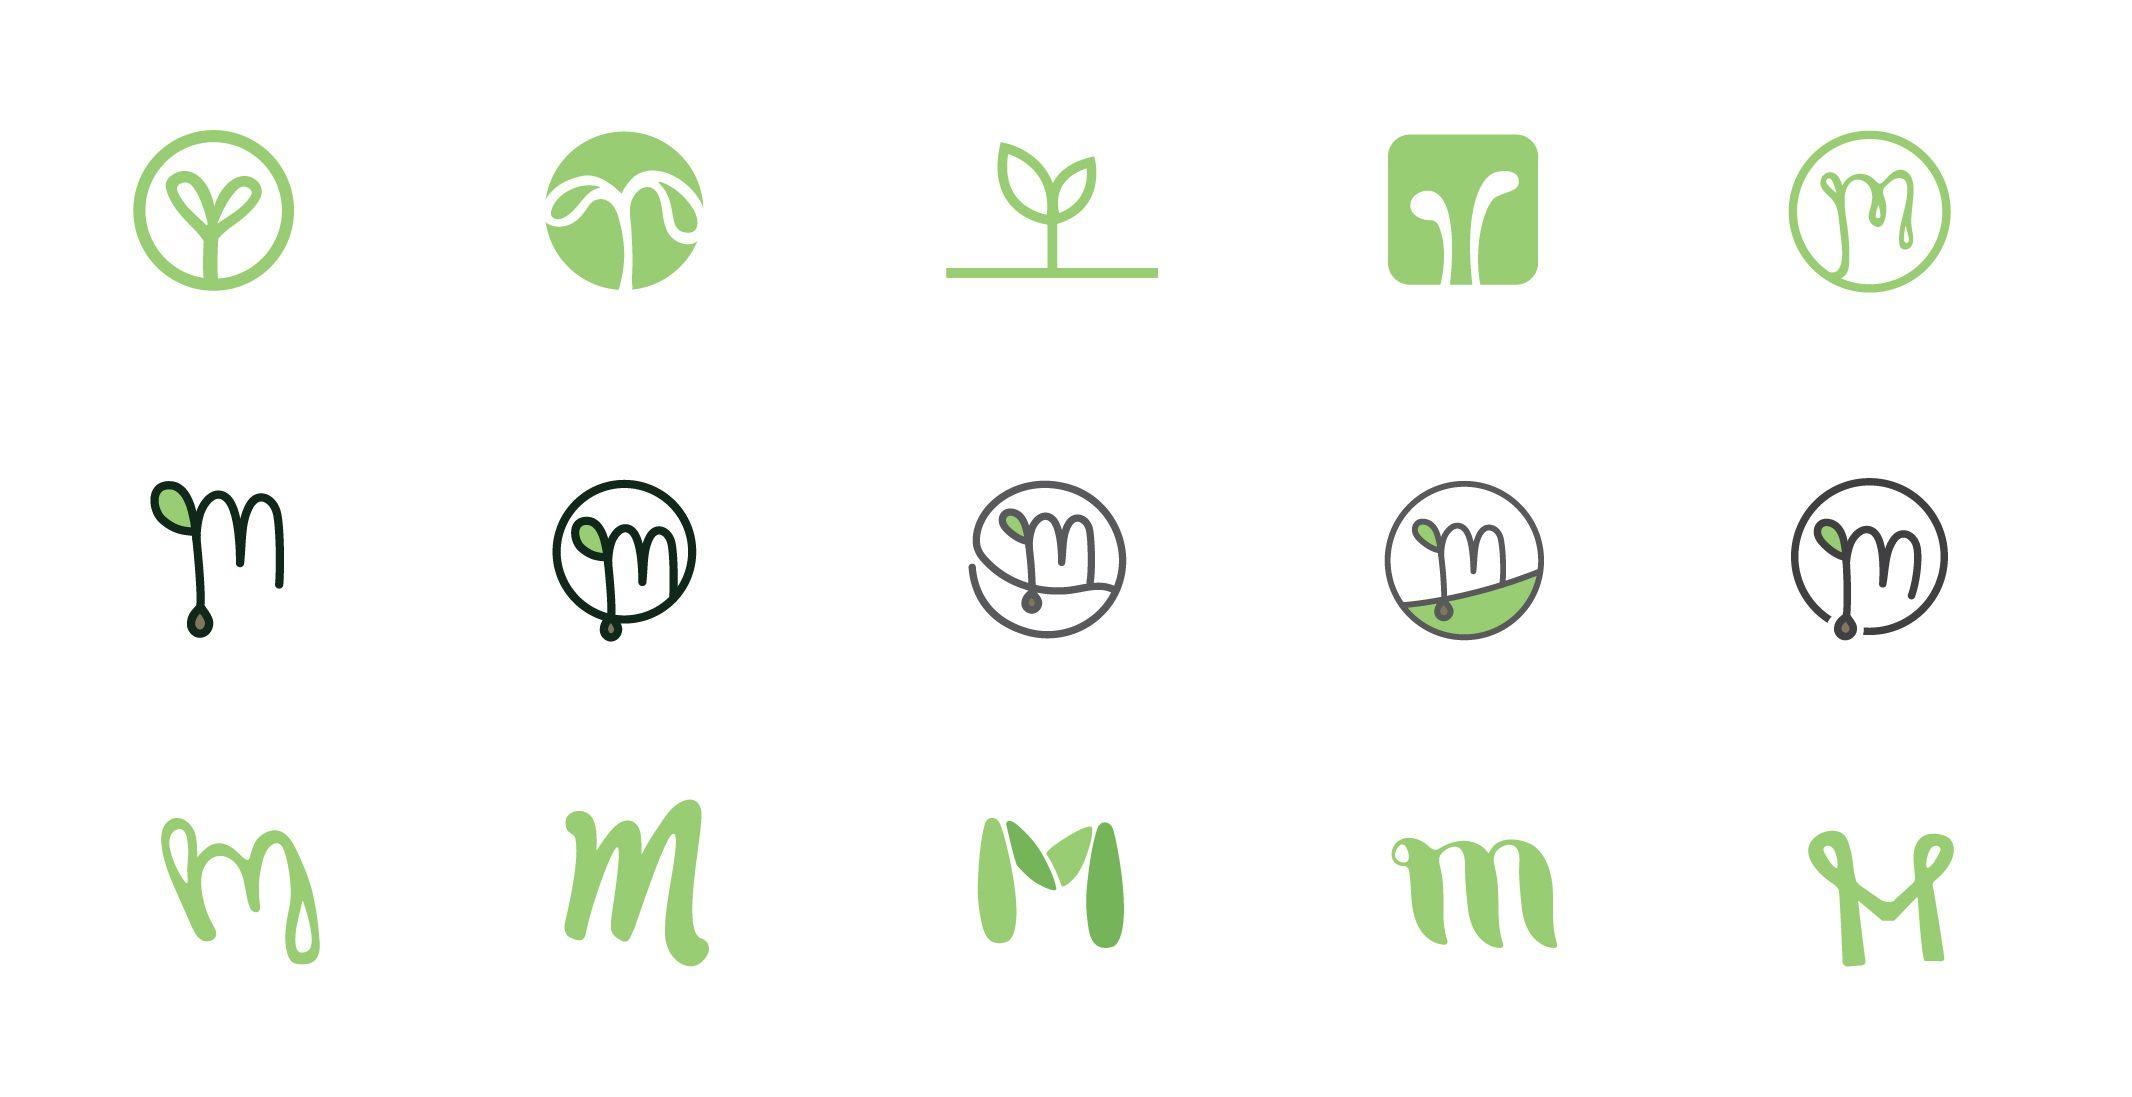 Microgreens Logo - Logo Process #logo #logodesign #greens #microgreens #modern #icon ...